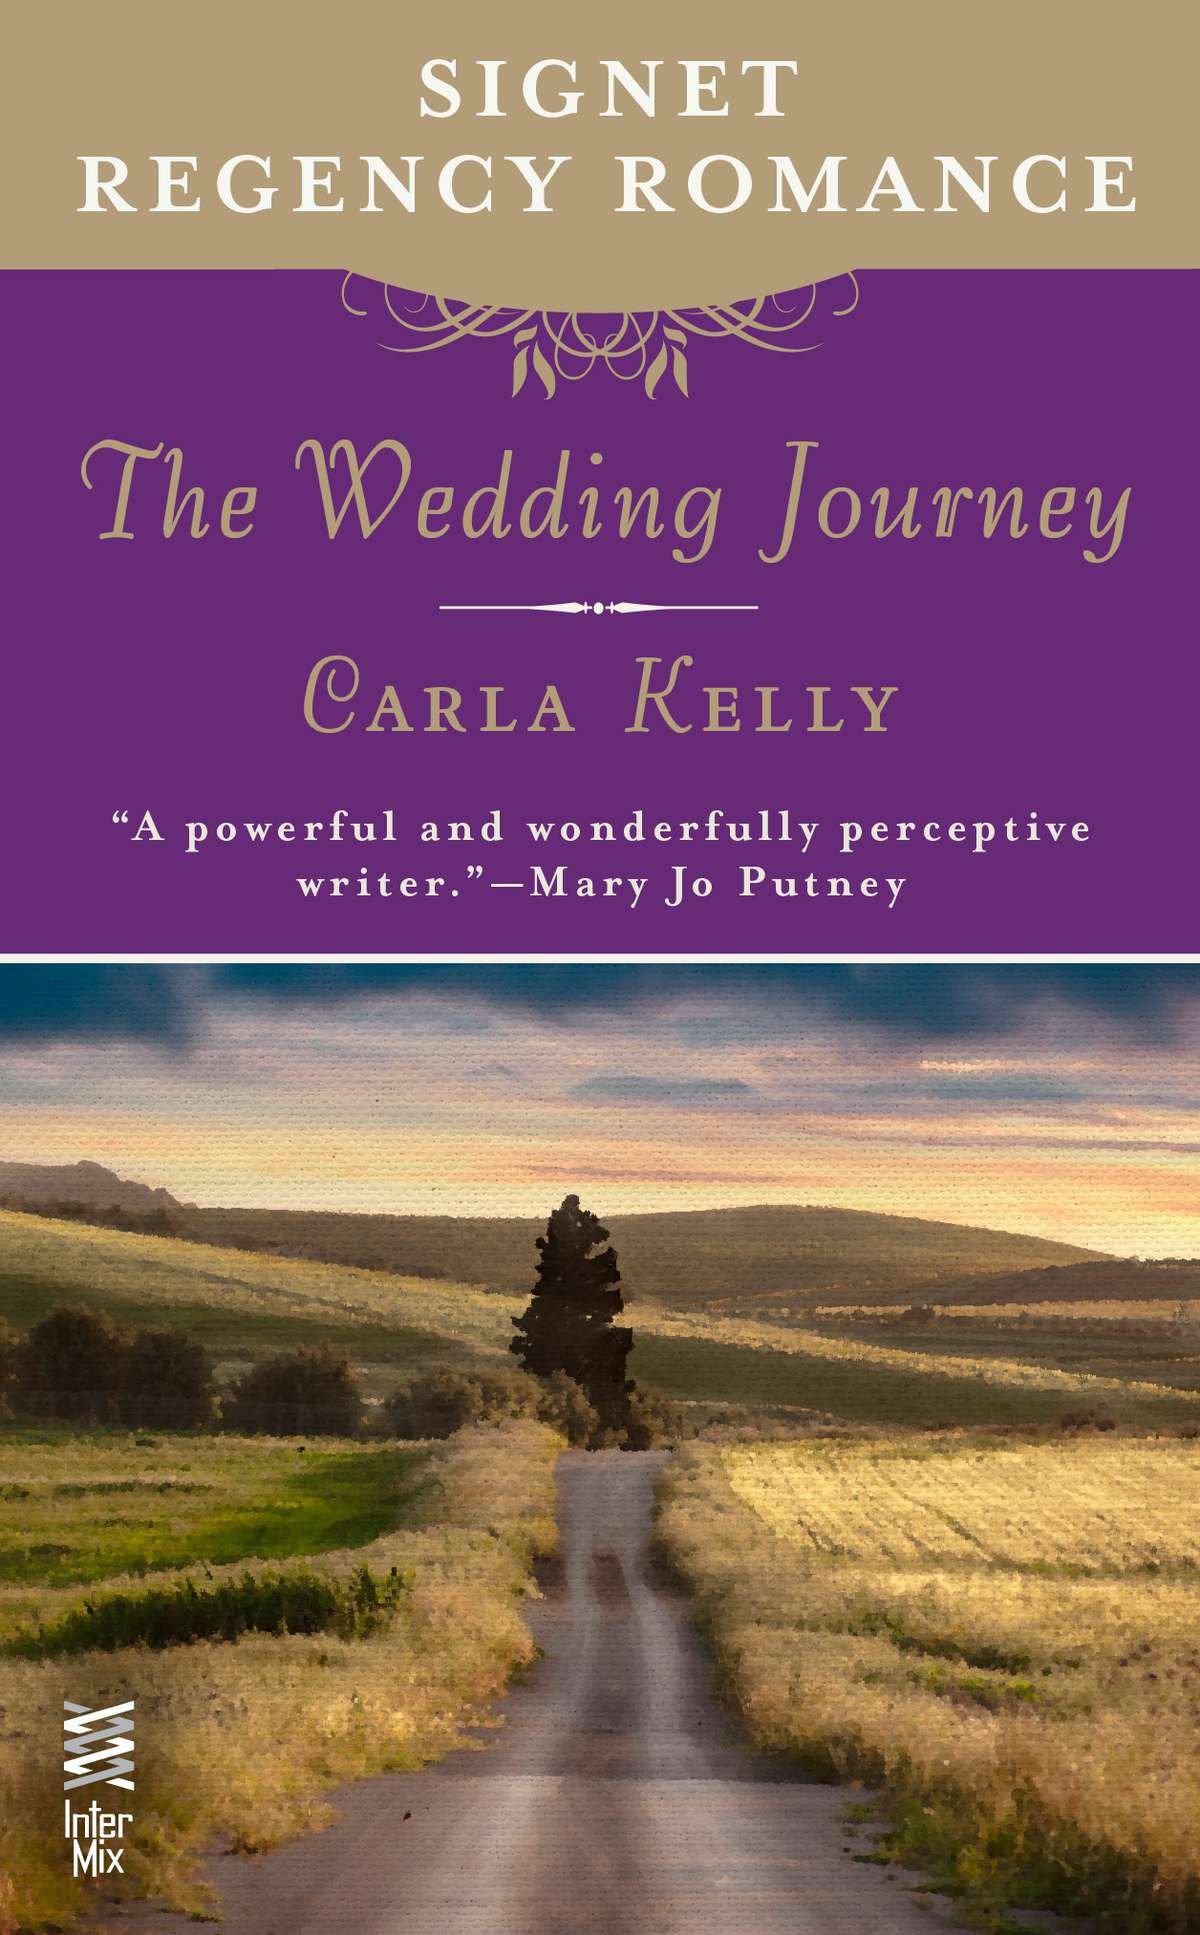 The Wedding Journey Signet Regency Romance (InterMix) cover image